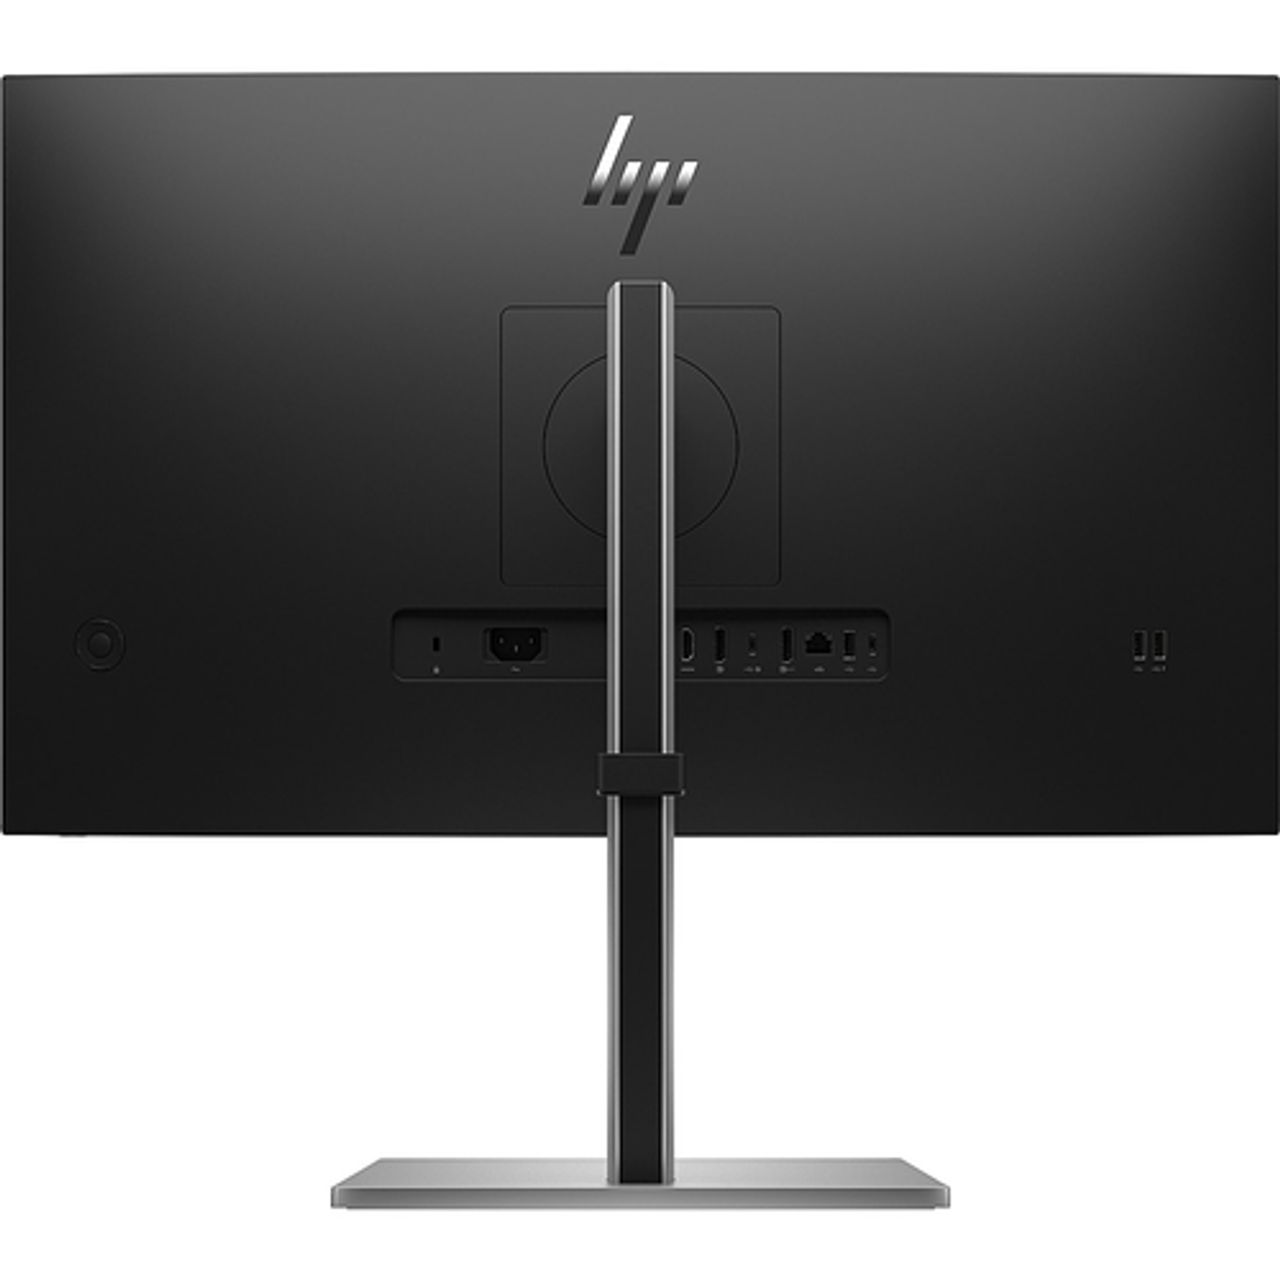 HP - 27" IPS LCD 75Hz Monitor (USB, HDMI) - Black, Silver, Multicolor